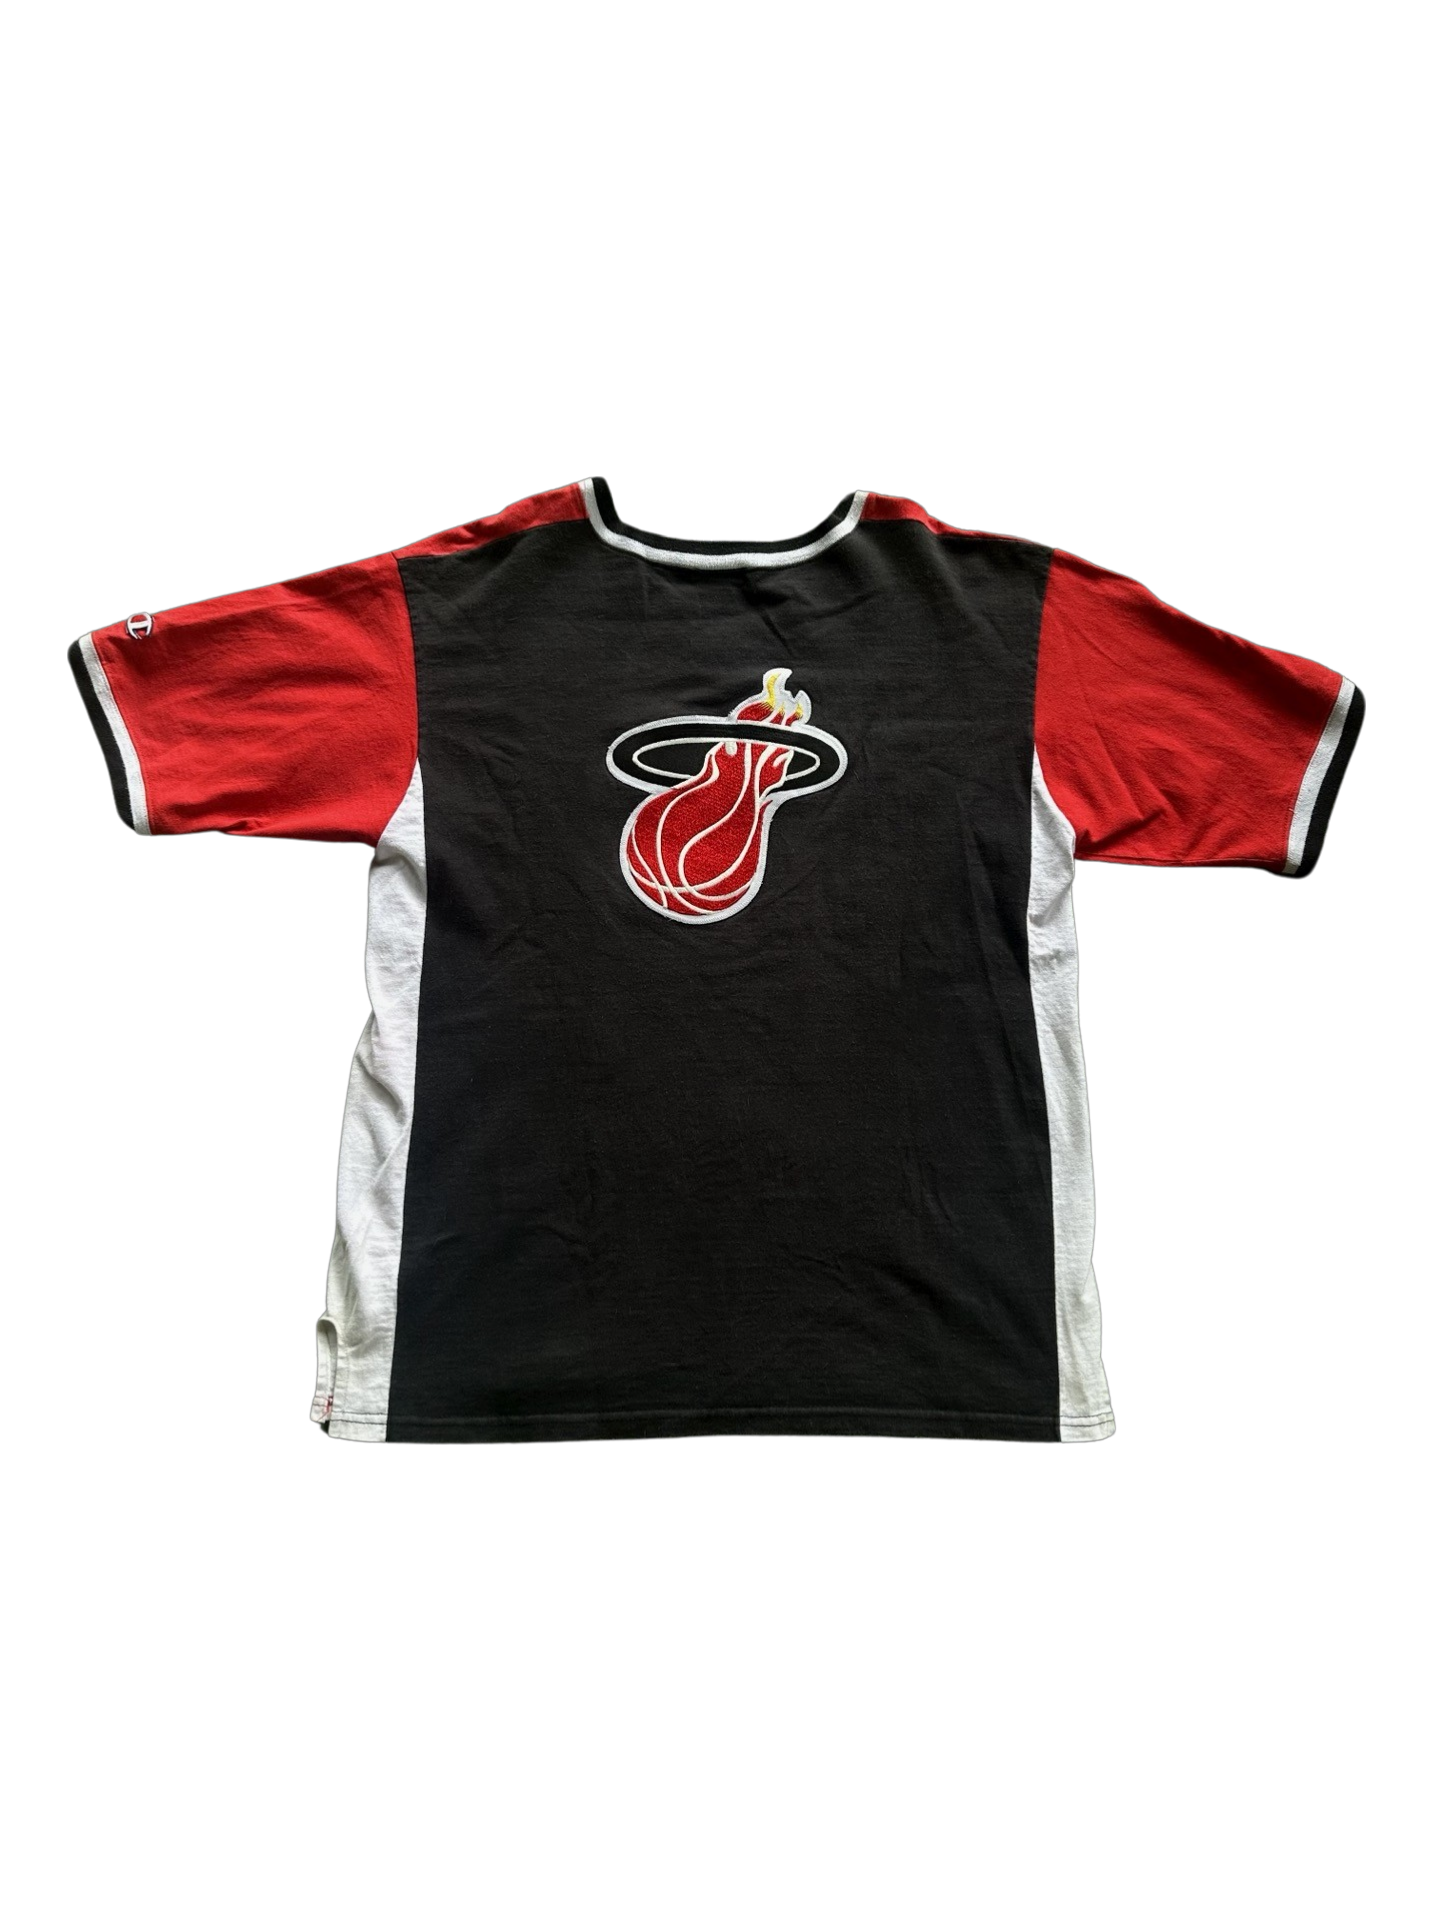 Vintage Miami Heat Champion Shirt